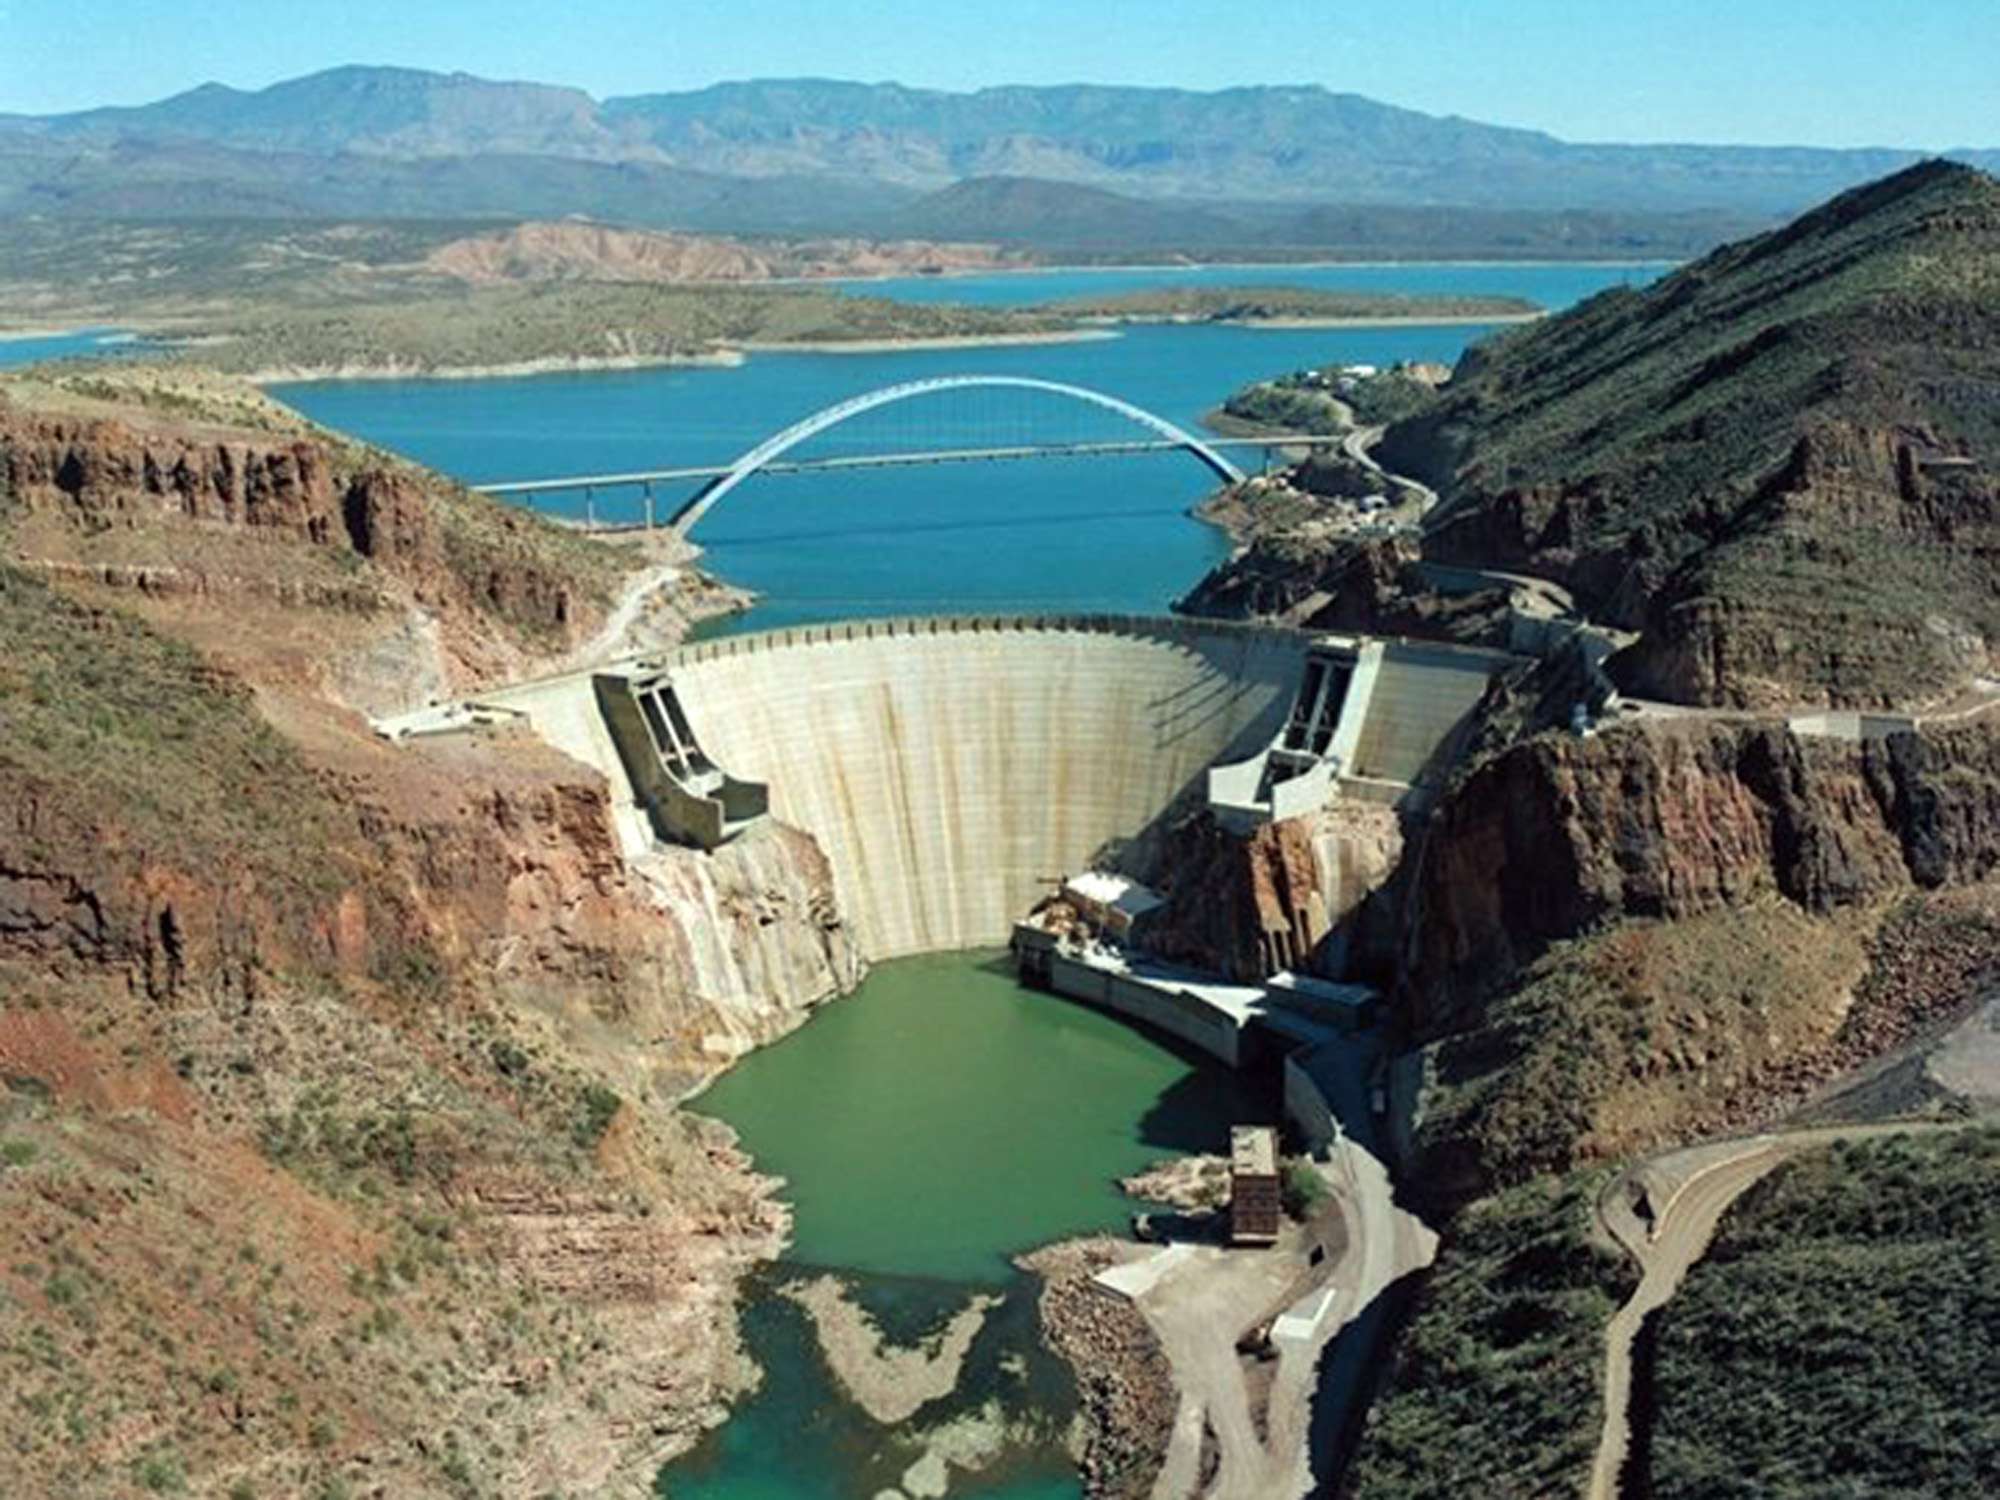 U.S. President Theodore Roosevelt dedicated the Roosevelt Dam himself in 1911.